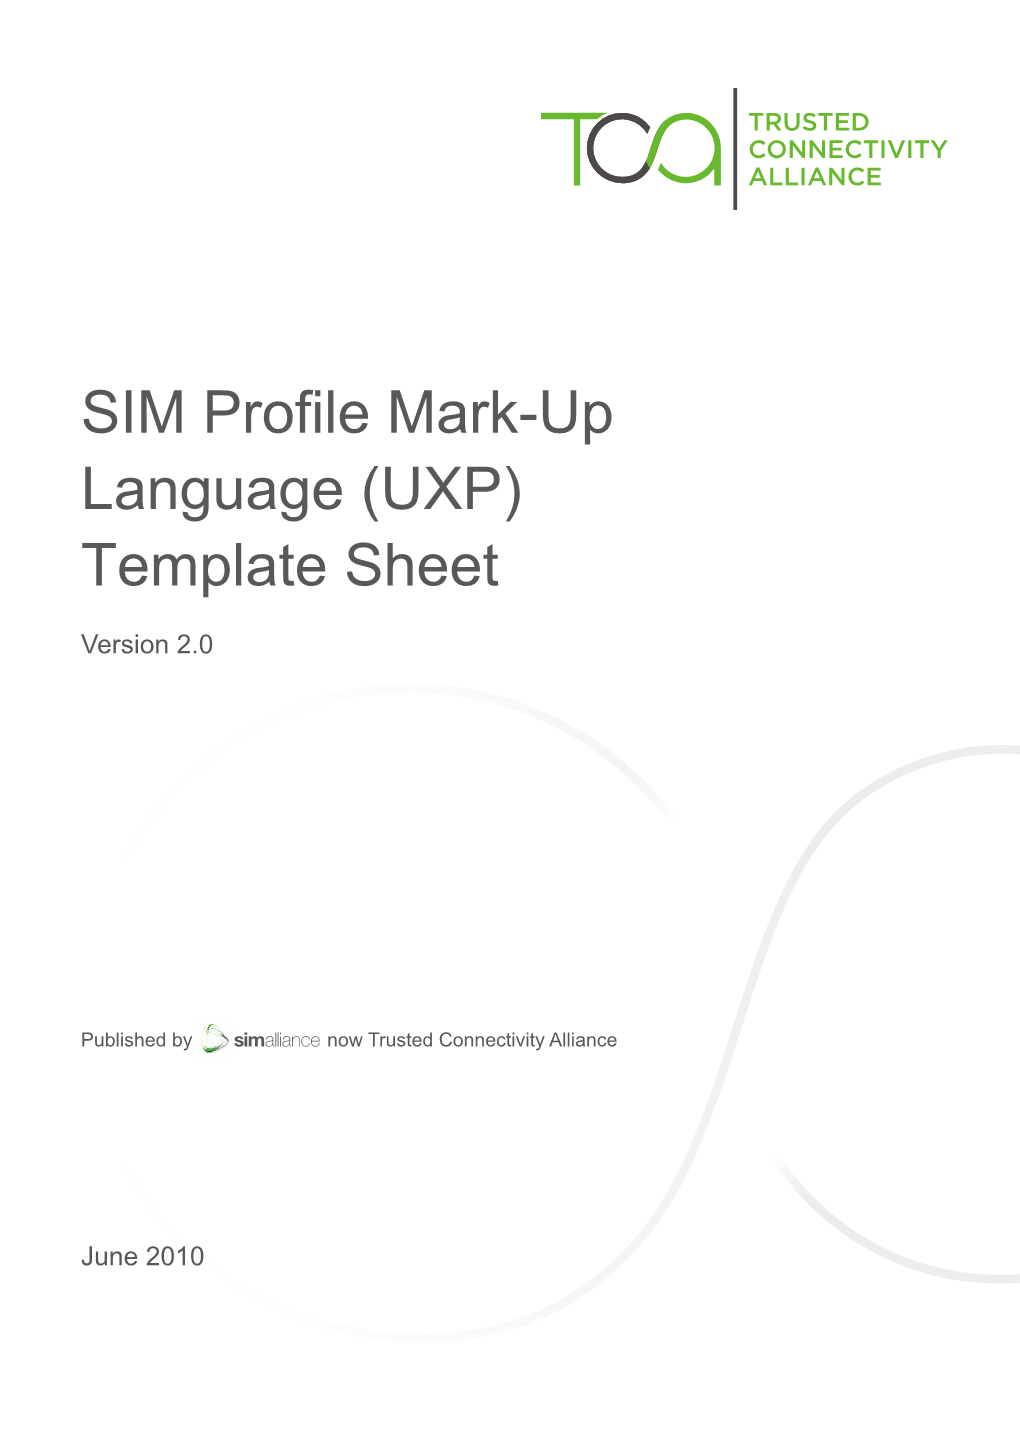 SIM Profile Mark-Up Language V2 0 Final Release Candidate